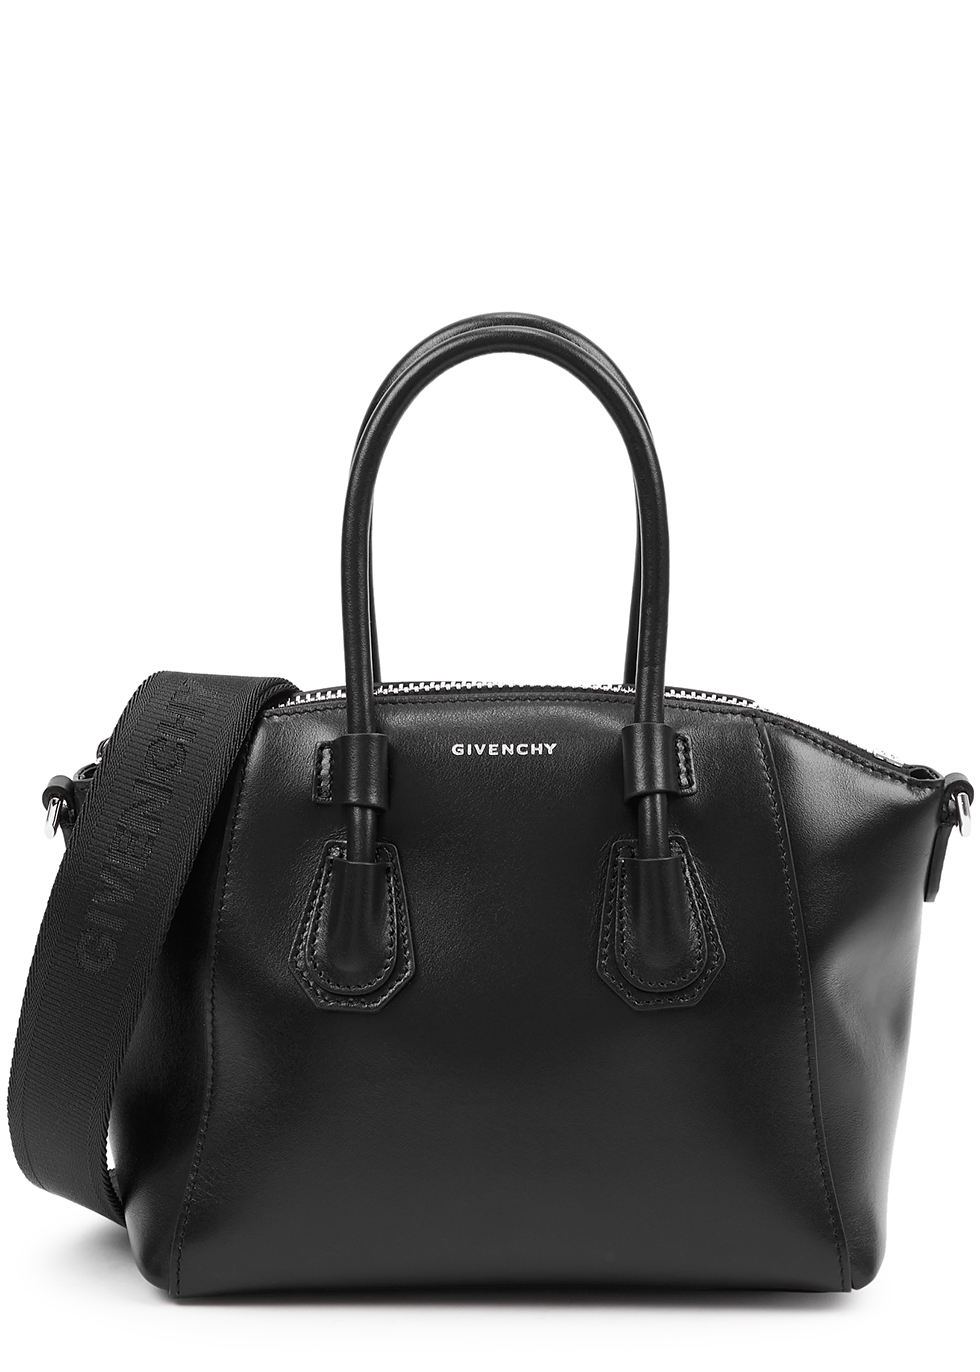 Givenchy Antigona Sport mini black leather top handle bag - Harvey Nichols